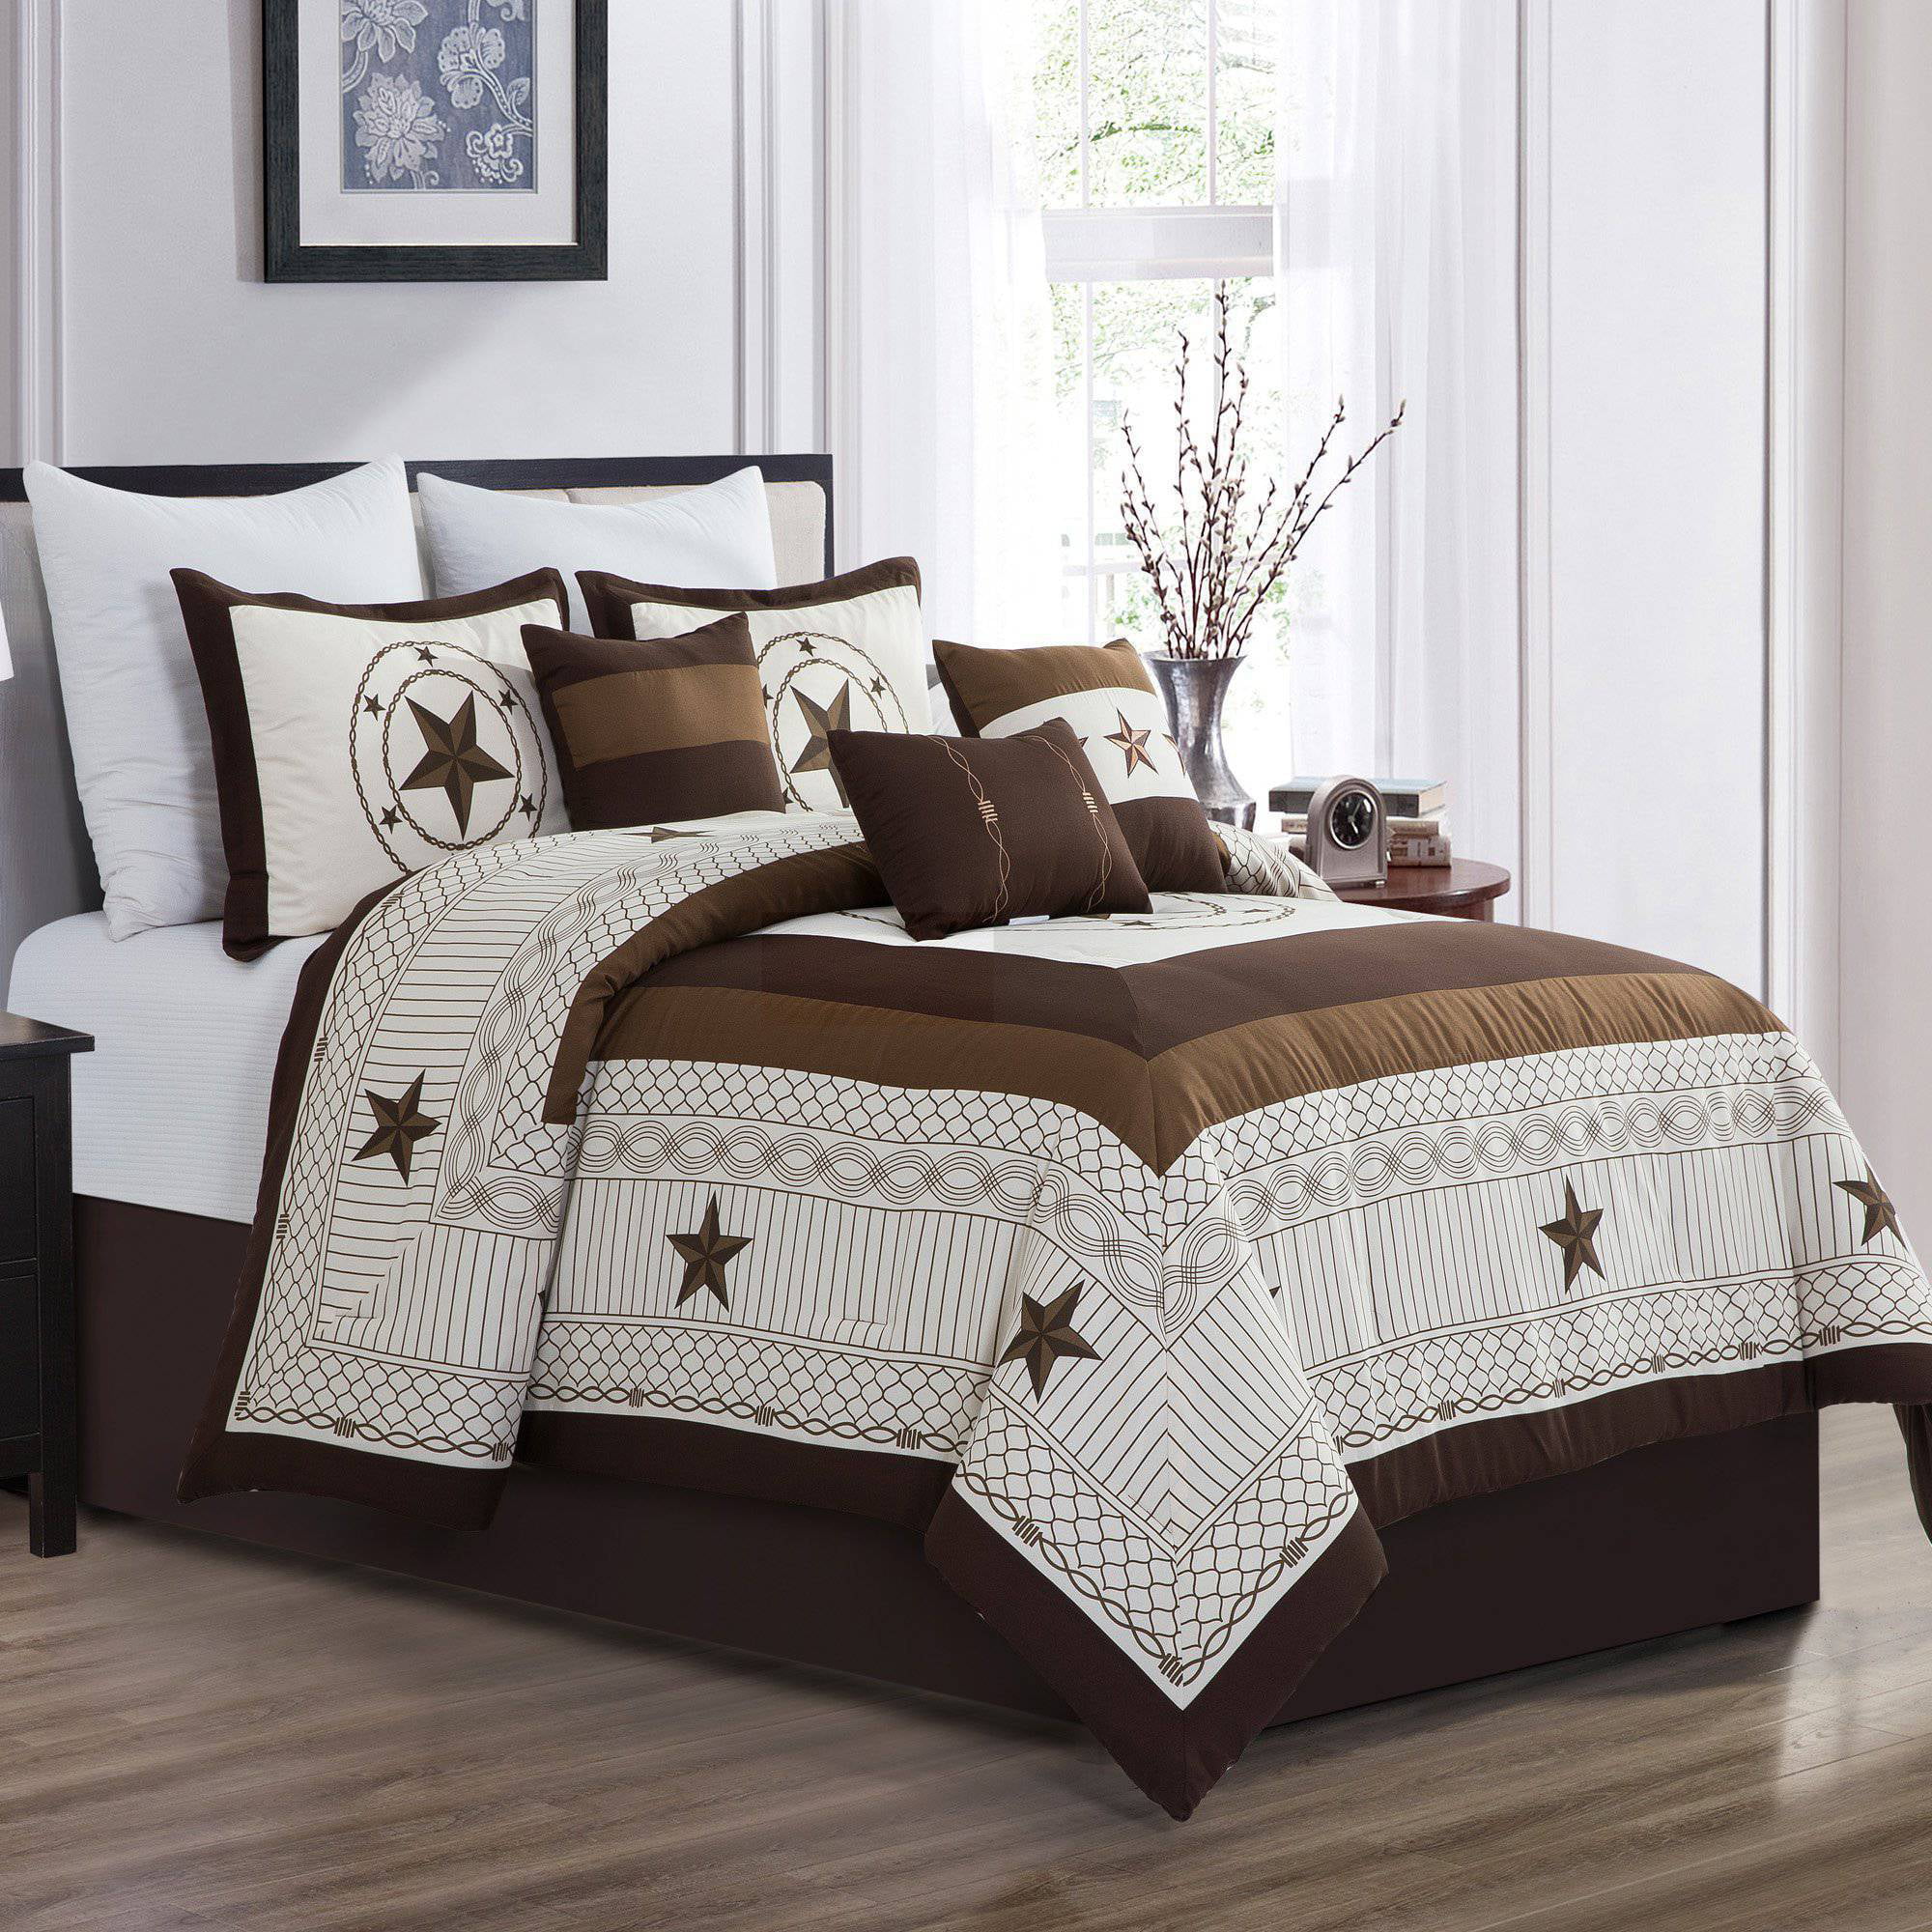 C.King 7 Piece Comforter Set Southwestern Star Bed Skirt Cabin Lodge Queen,King 